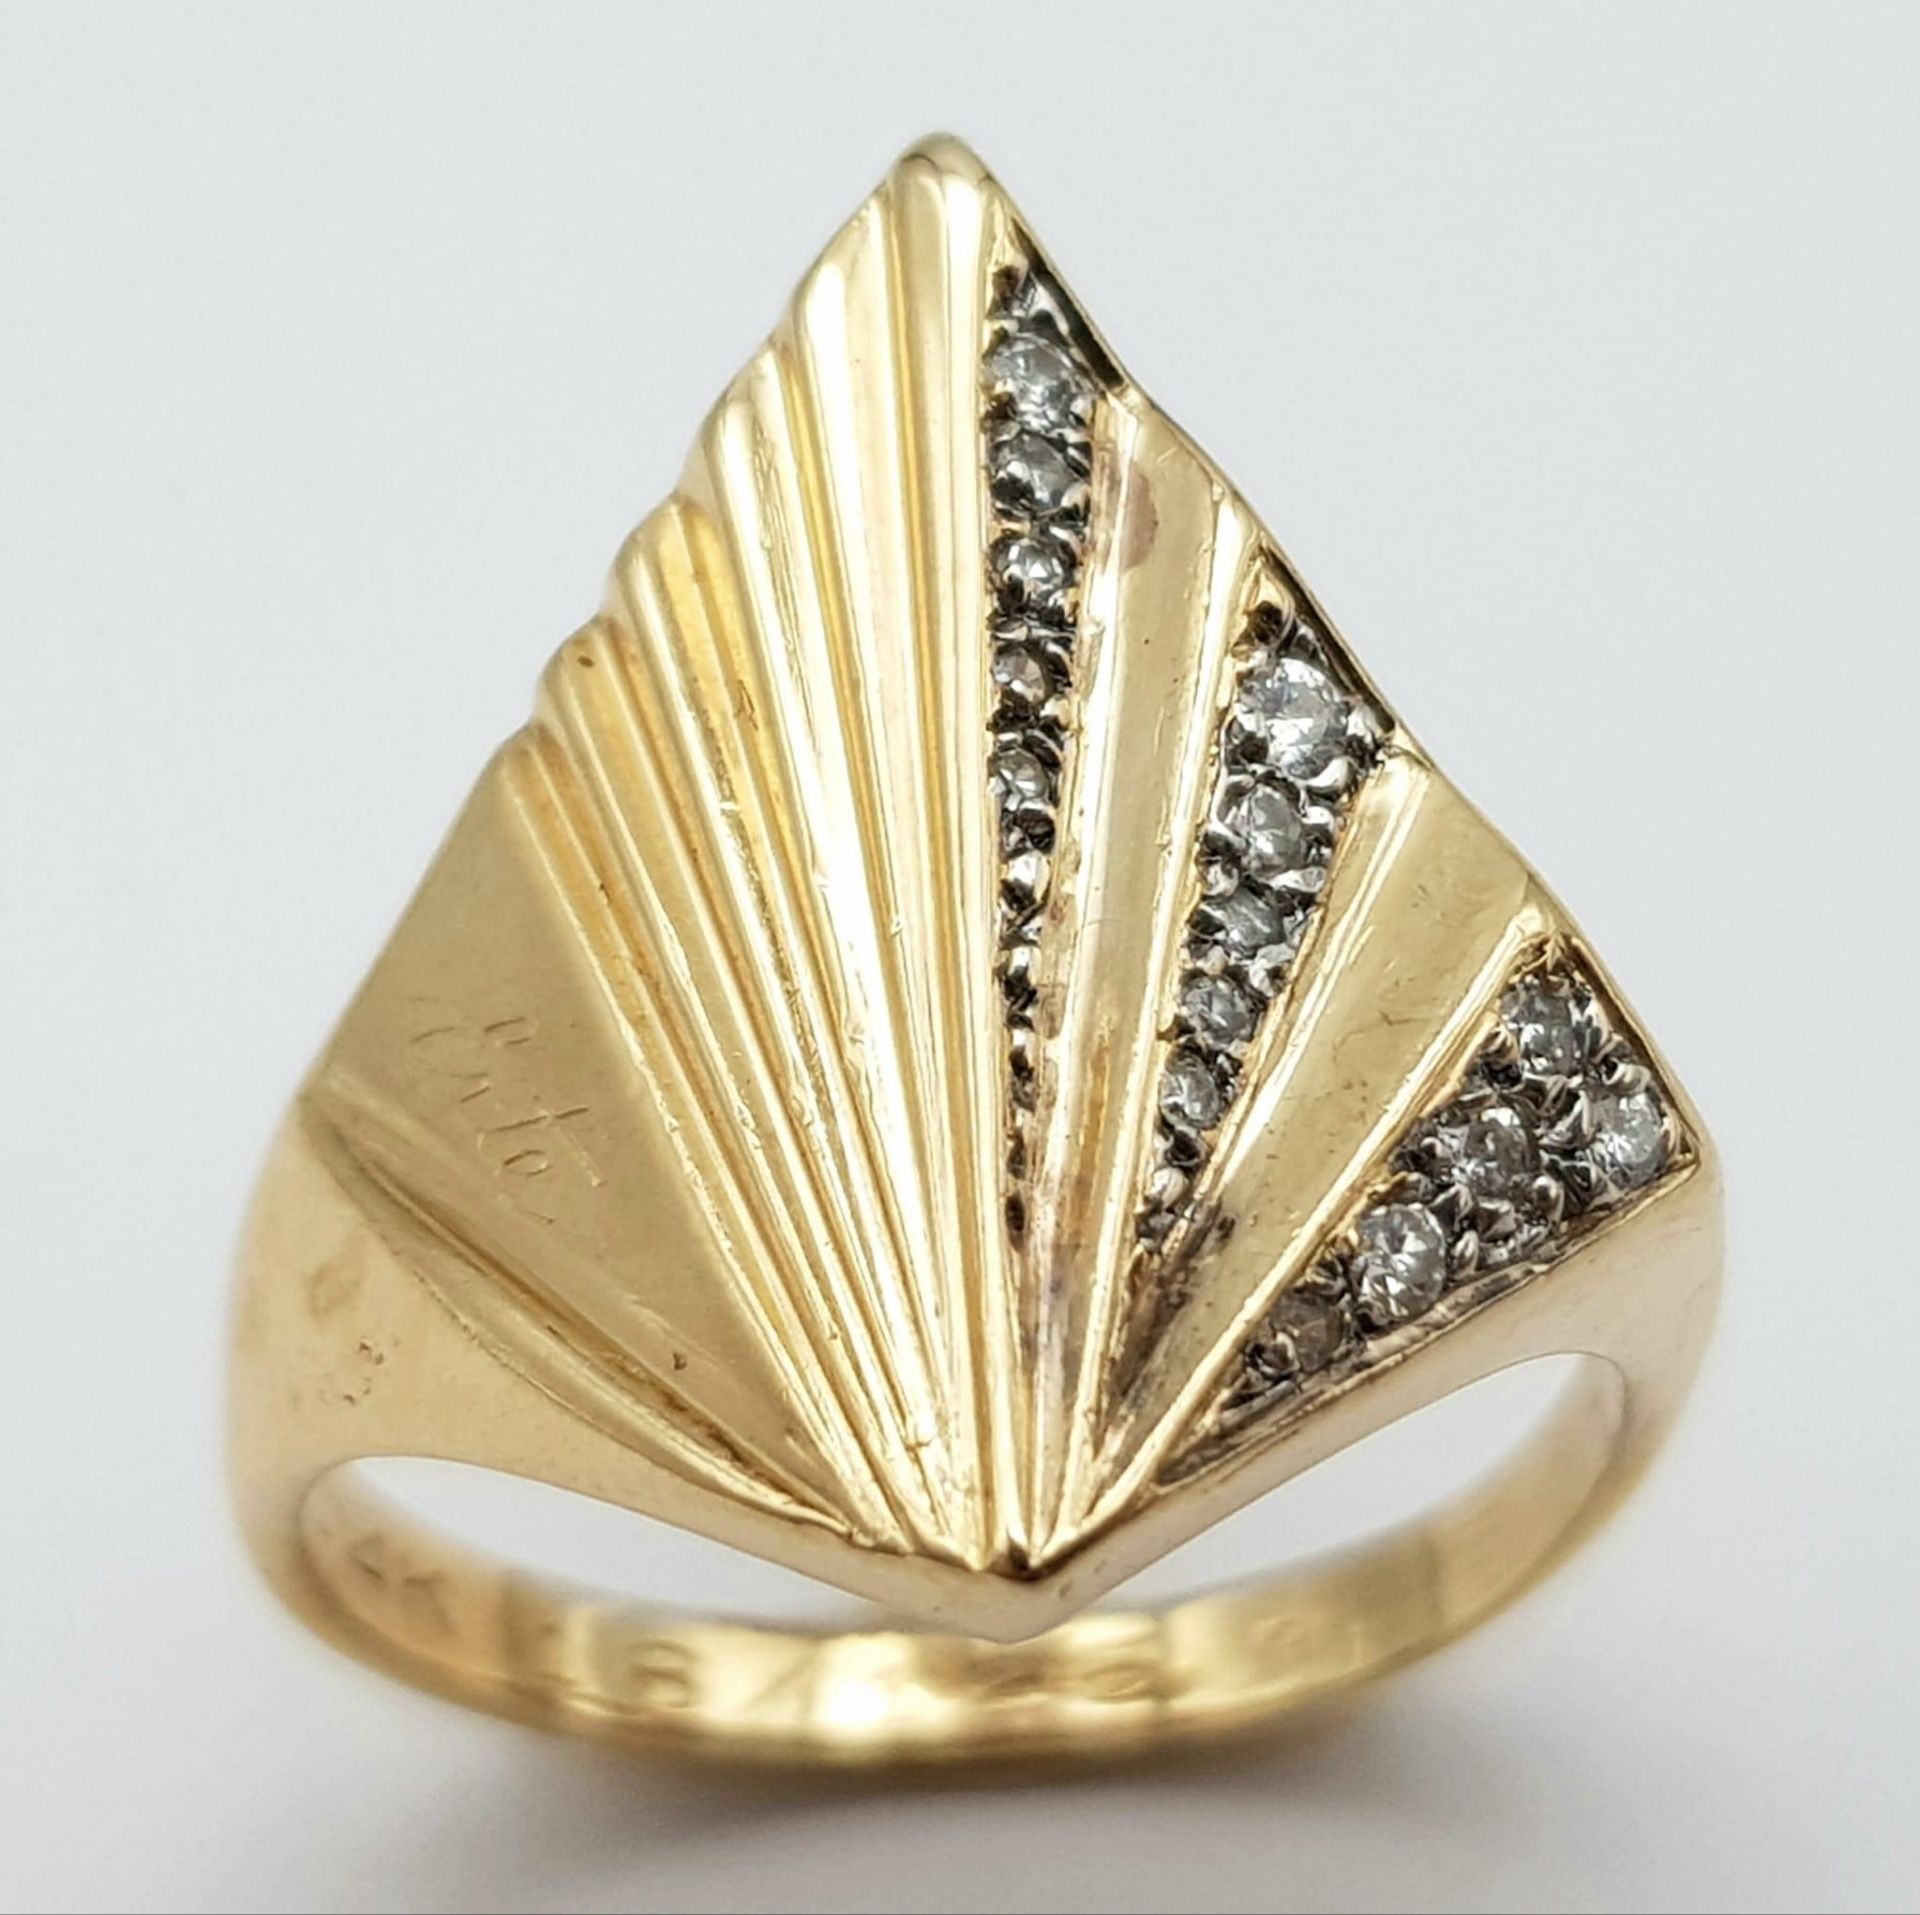 A 14K YELLOW GOLD ART DECO STYLE DIAMOND SET RING. 4.1G. SIZE M. - Image 2 of 6